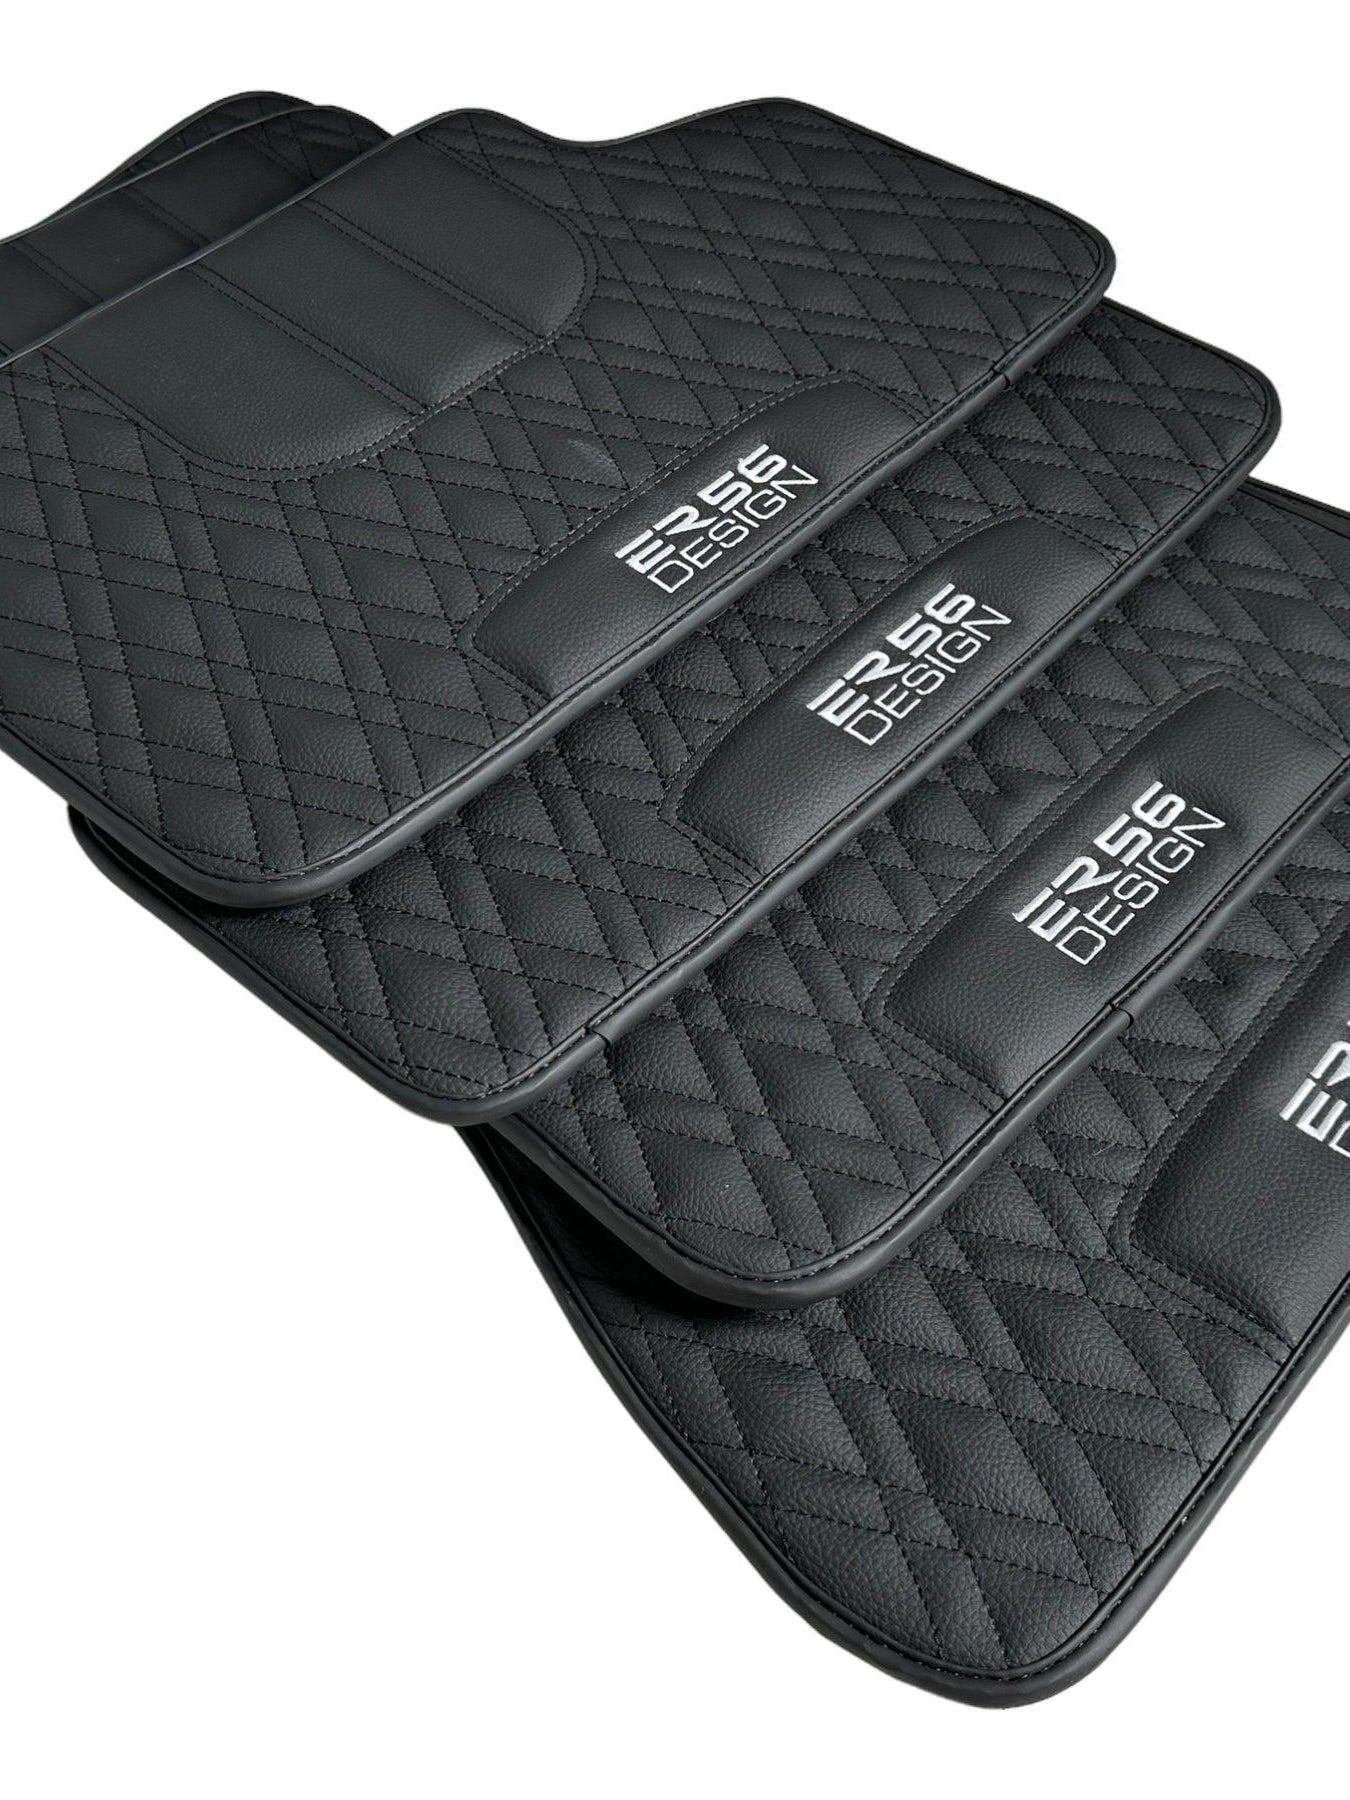 Floor Mats For BMW X1 Series E84 Black Leather Er56 Design - AutoWin